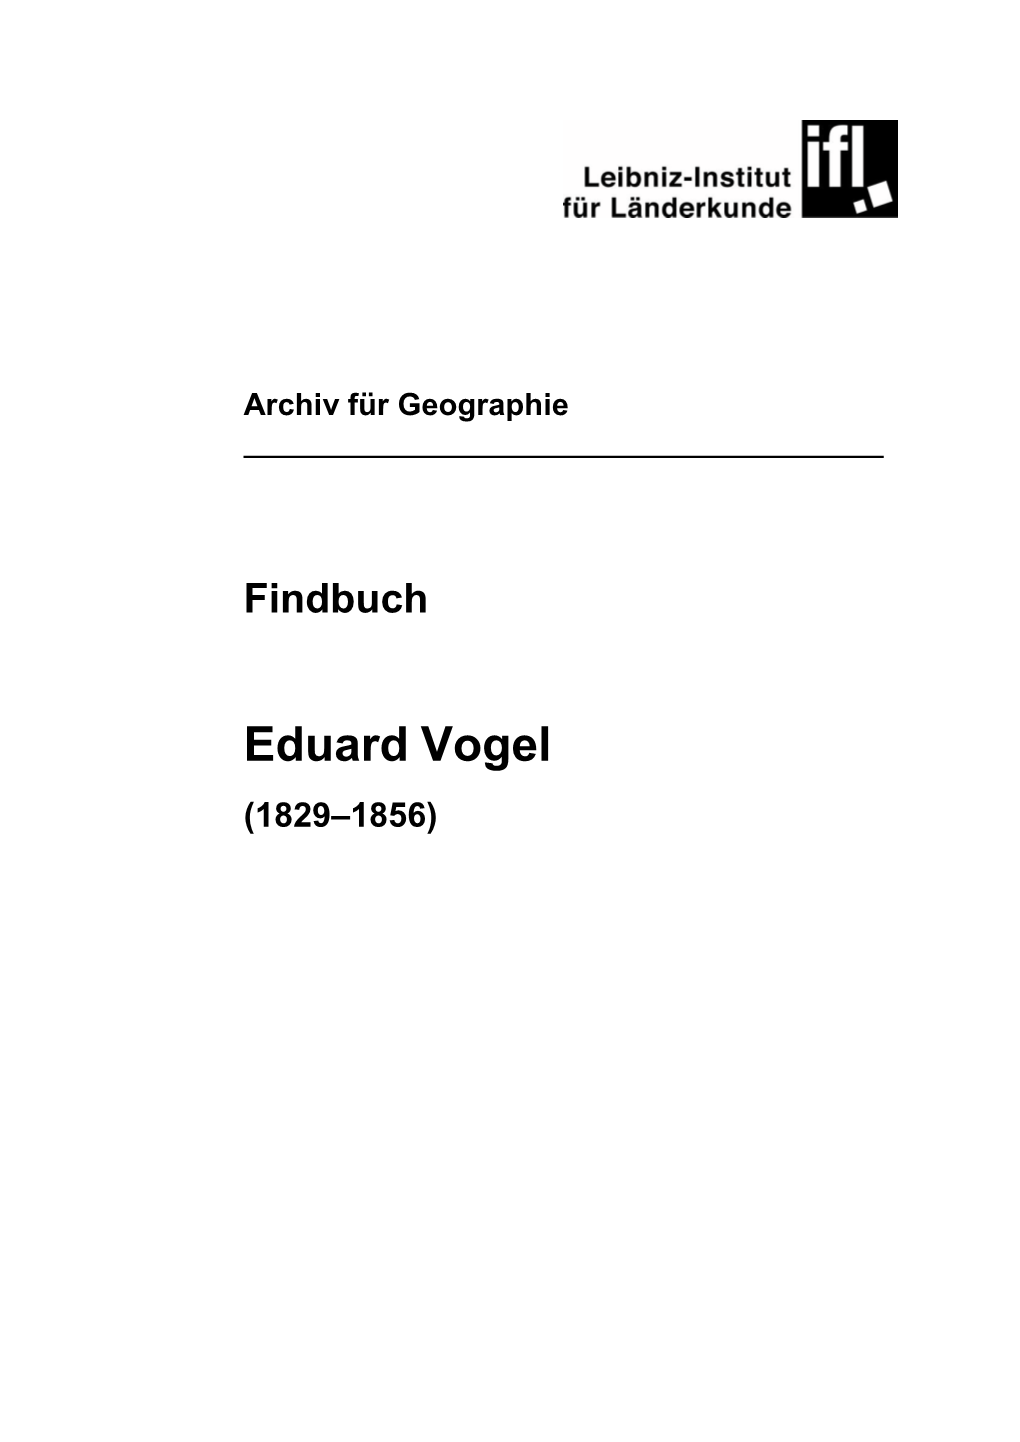 Findbuch Eduard Vogel